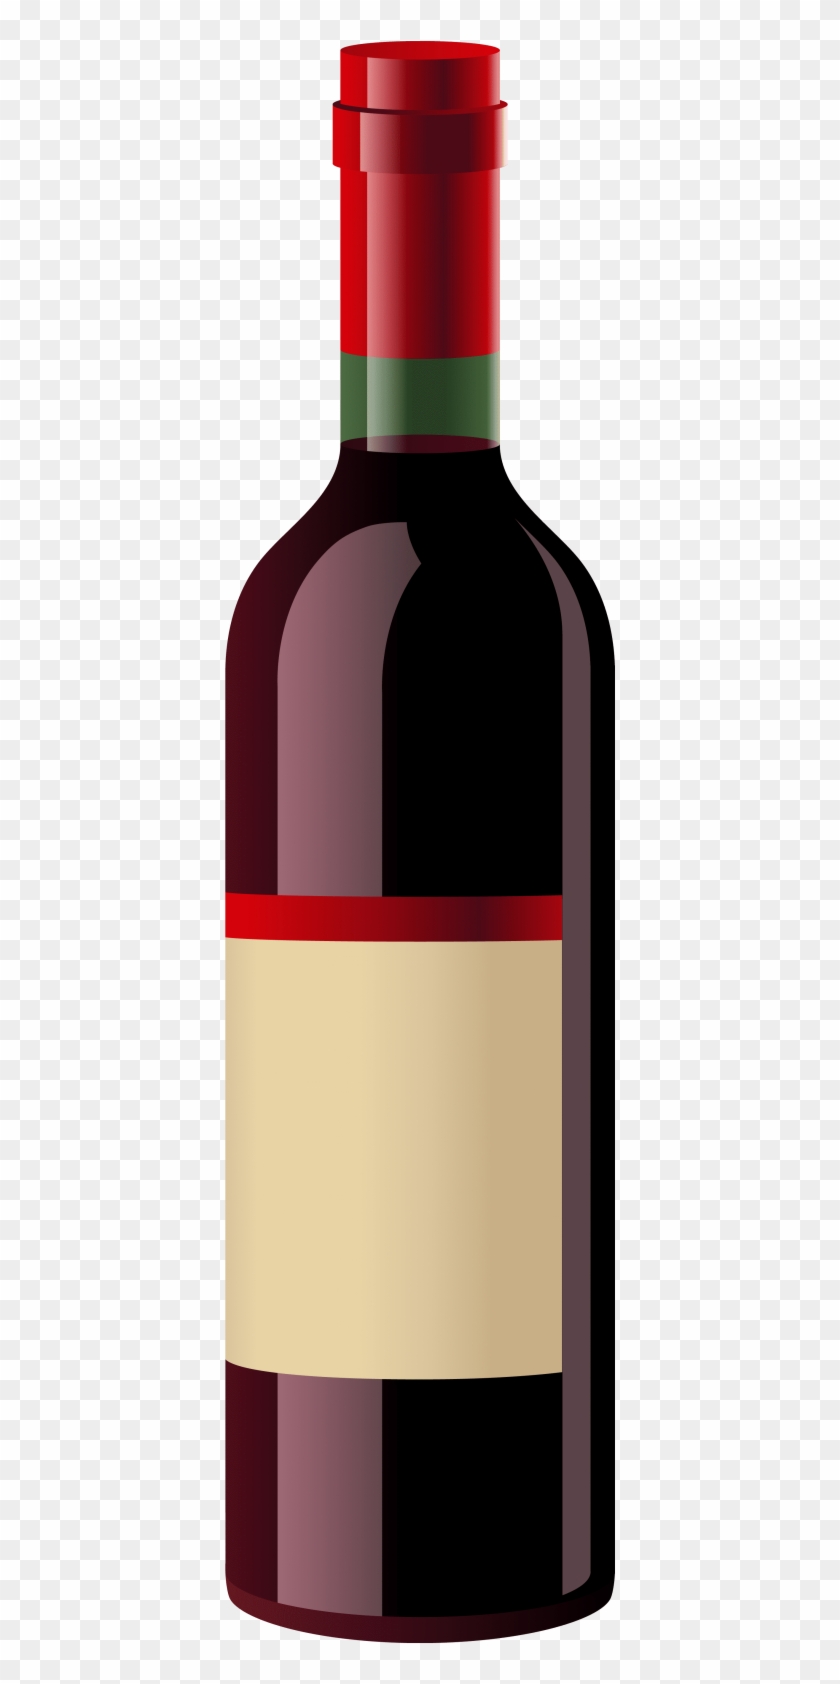 Red Wine Bottle Png - Clip Art Red Wine Bottle Png #1457178